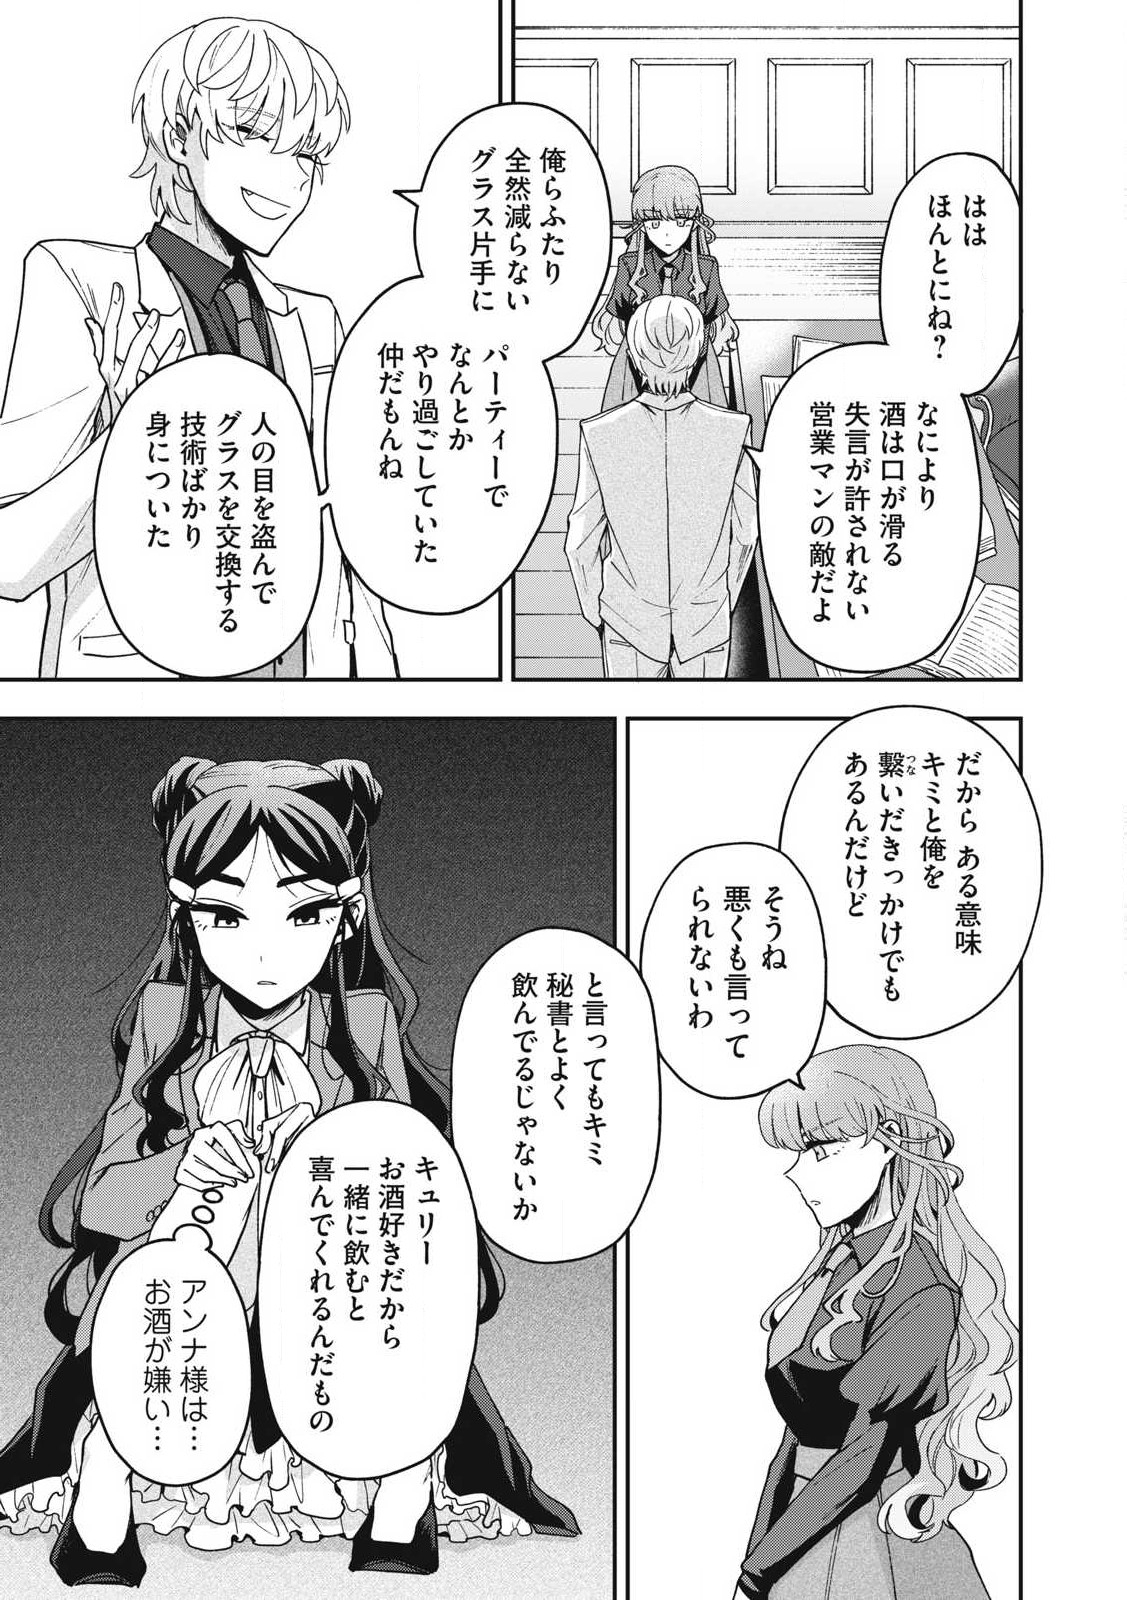 Yuki to Sumi - Chapter 23.2 - Page 5